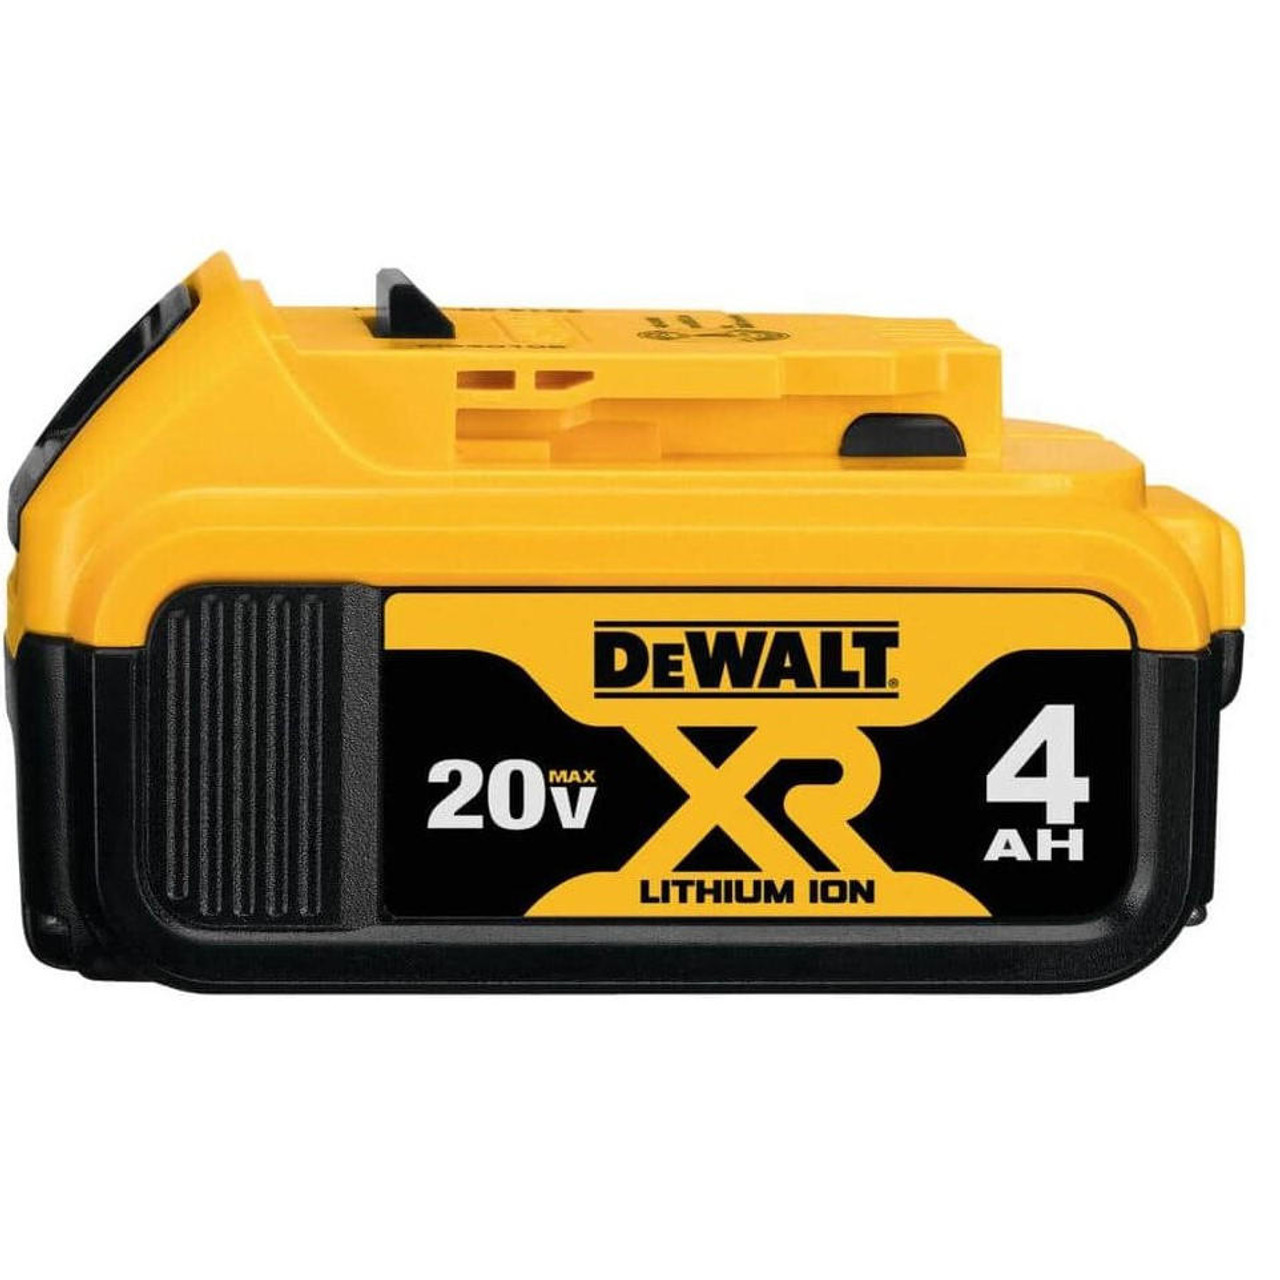 Dewalt DEWALT 20V Max Die Grinder Kit, 2 Batteries Variable Speed, 1-1/2-Inch DCG426M2 